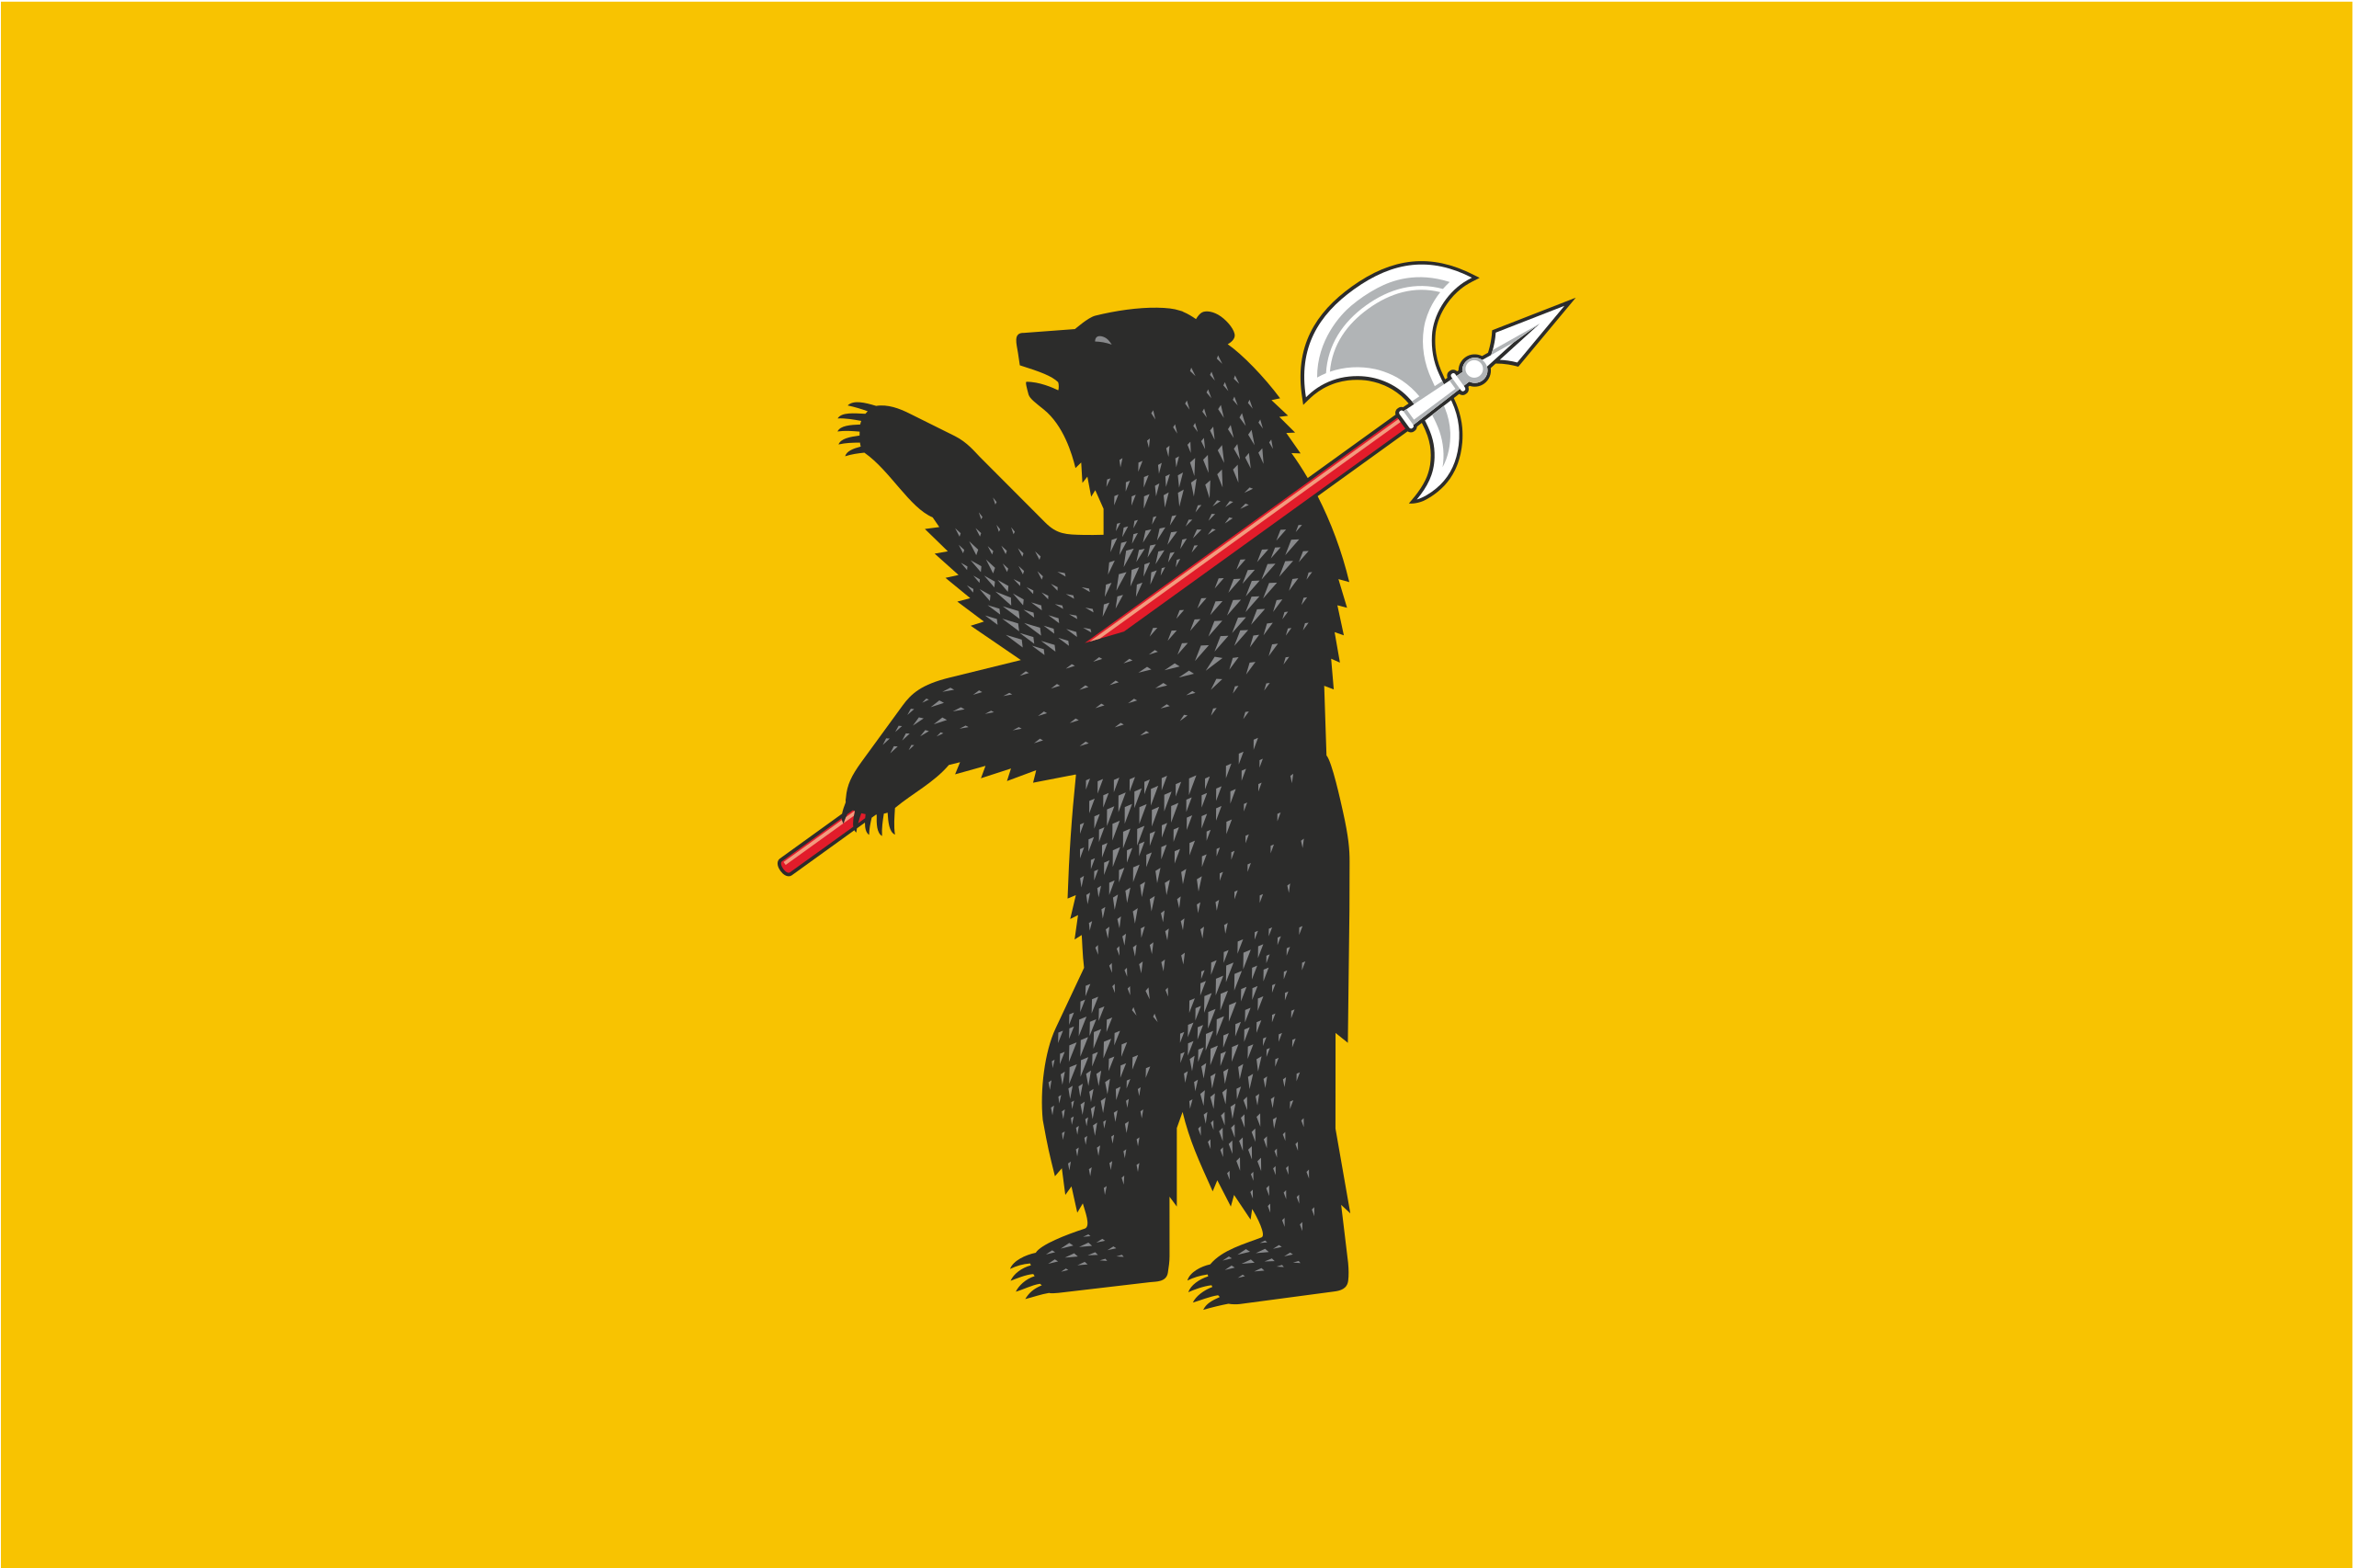 Oryol oblast flag, Russian Federation, vector illustration Stock